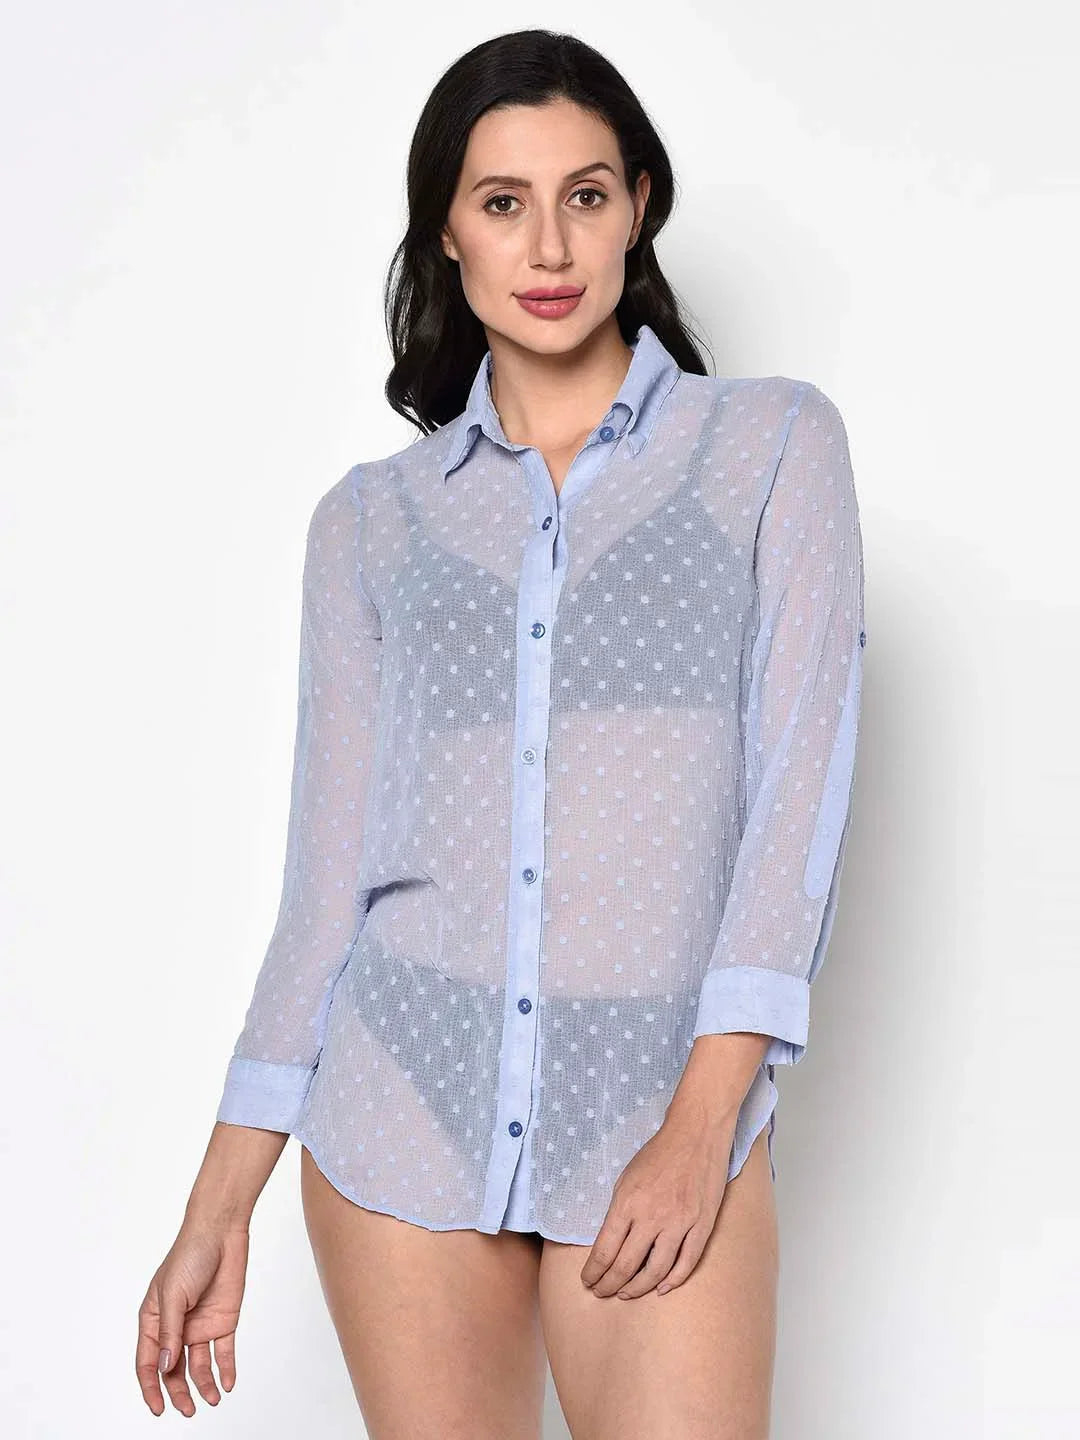 Blue Self Design Dobby Swim Wear Shirt - Da Intimo - Lingerie Online Store India